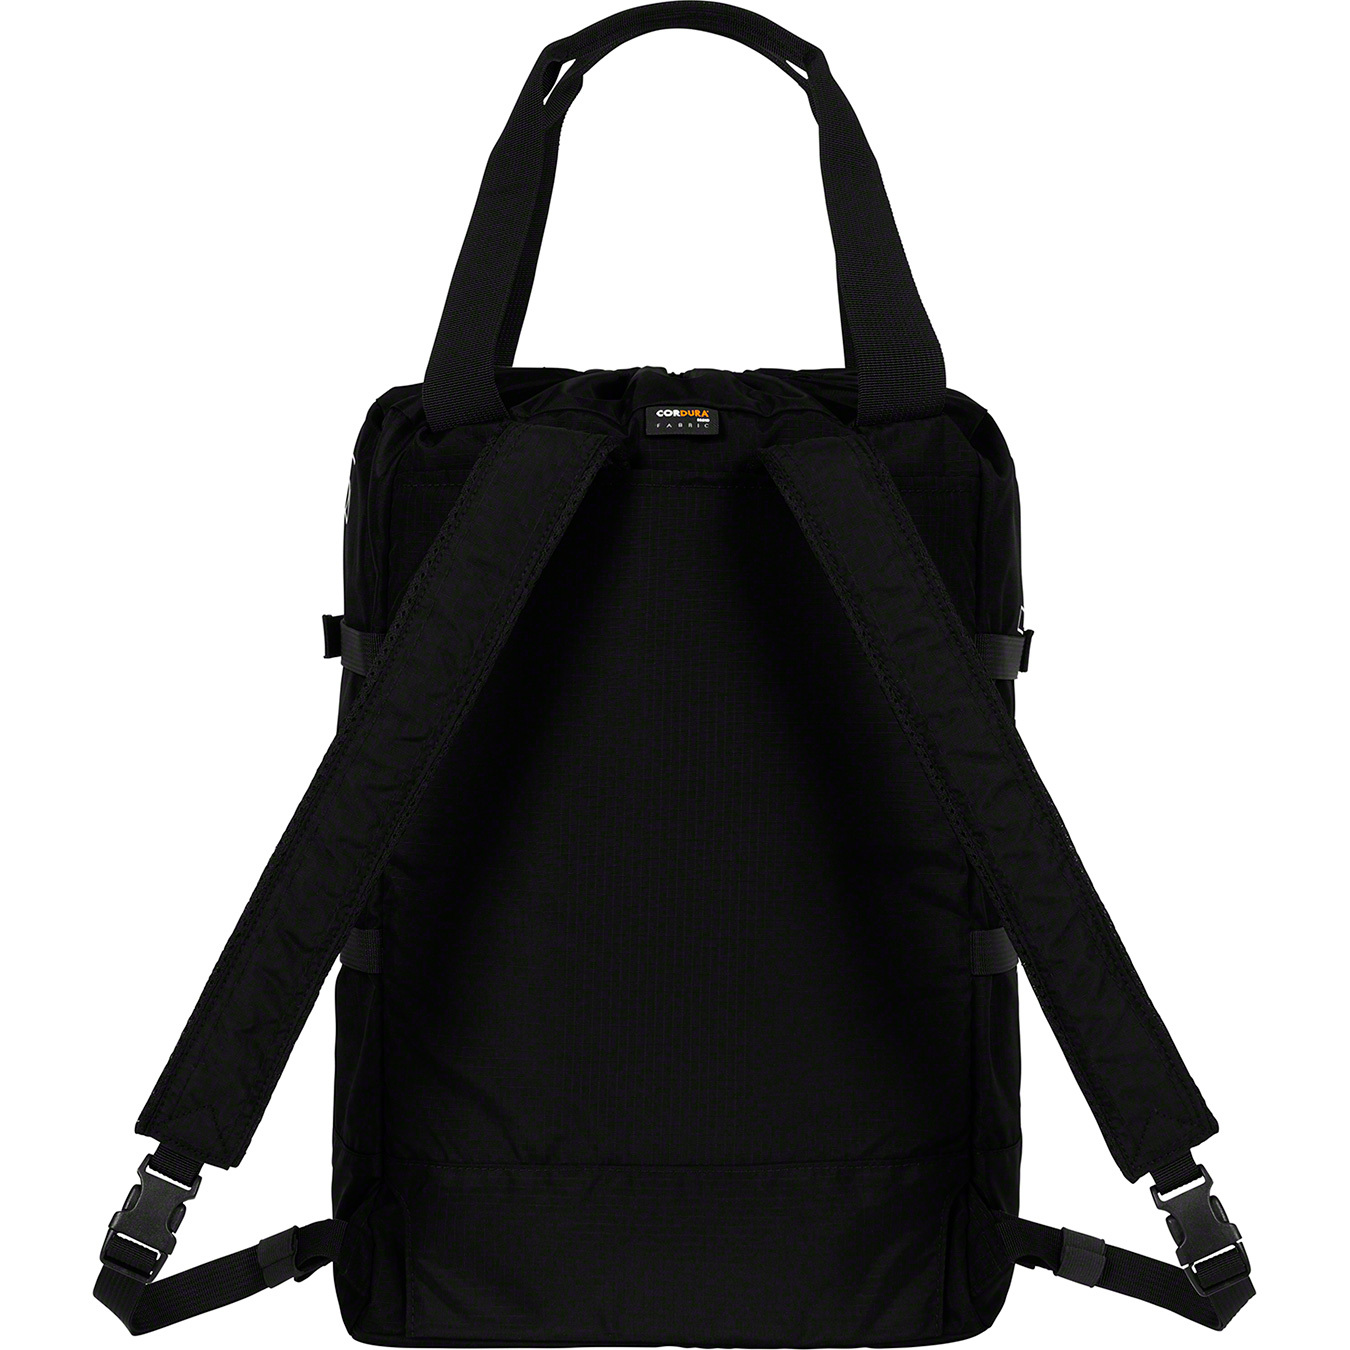 Supreme Tote Backpack